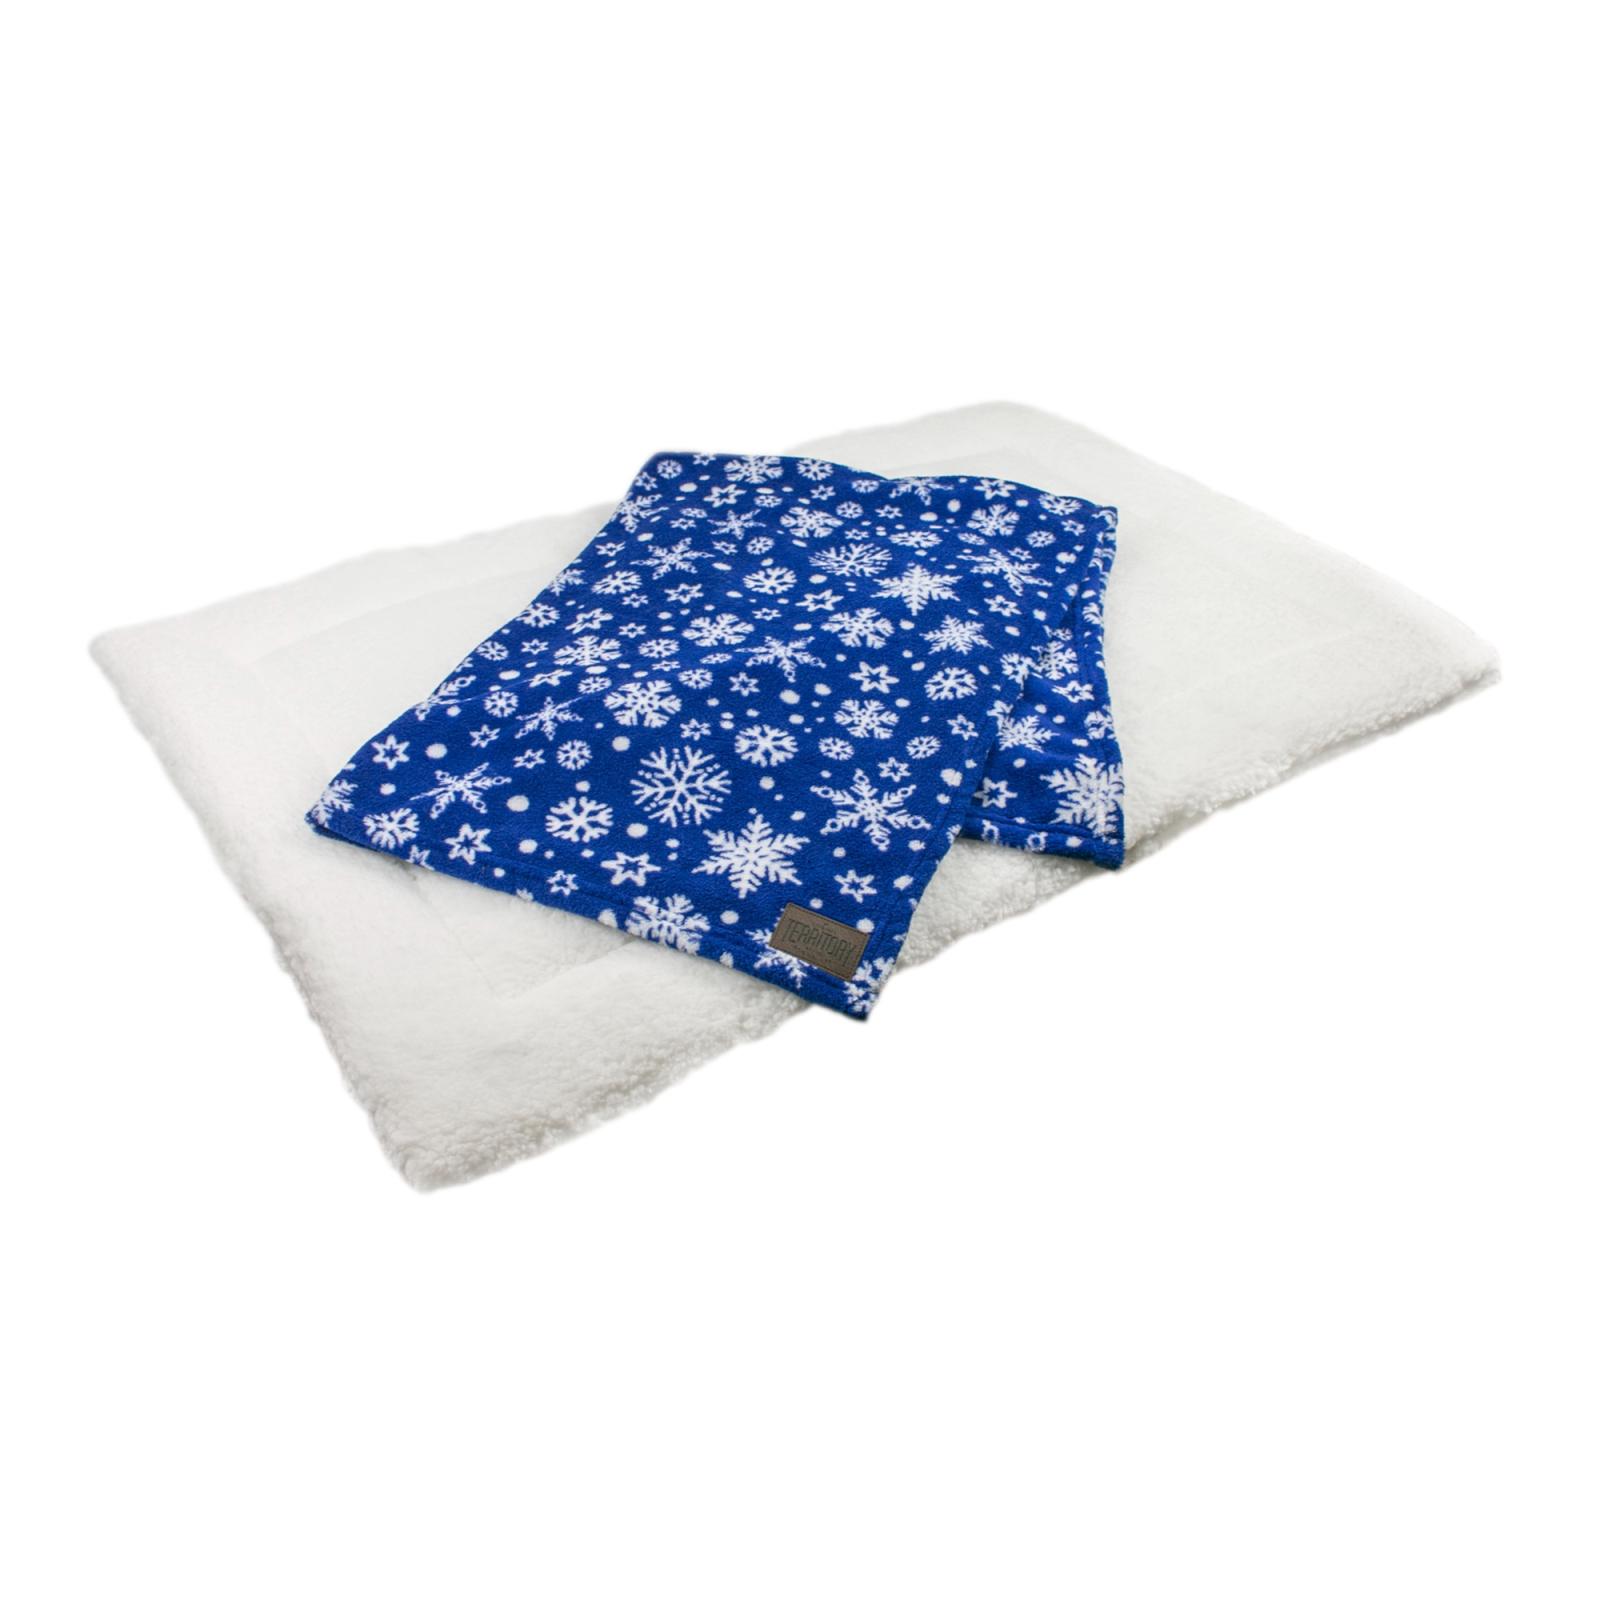 Original Territory Pet Bed and Blue Blanket Bundle